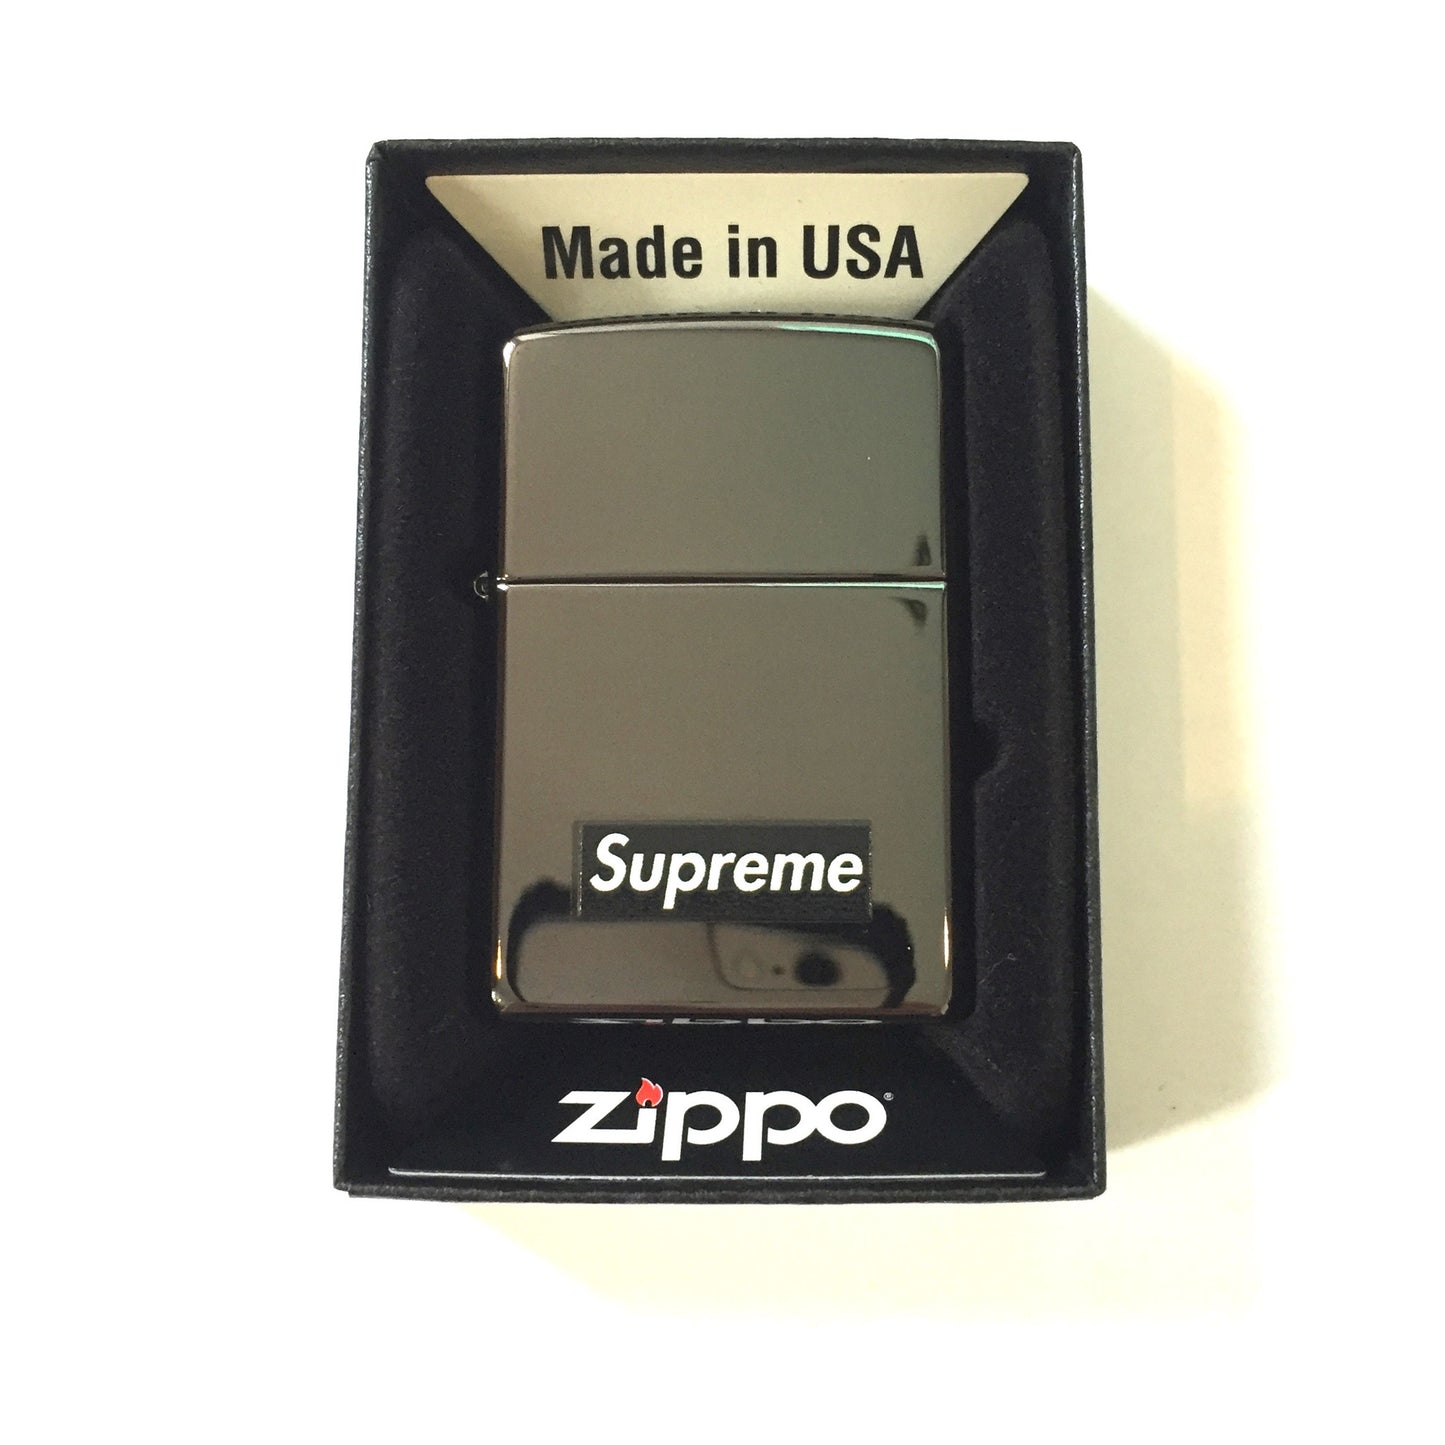 Supreme - Black Box Logo Lighter